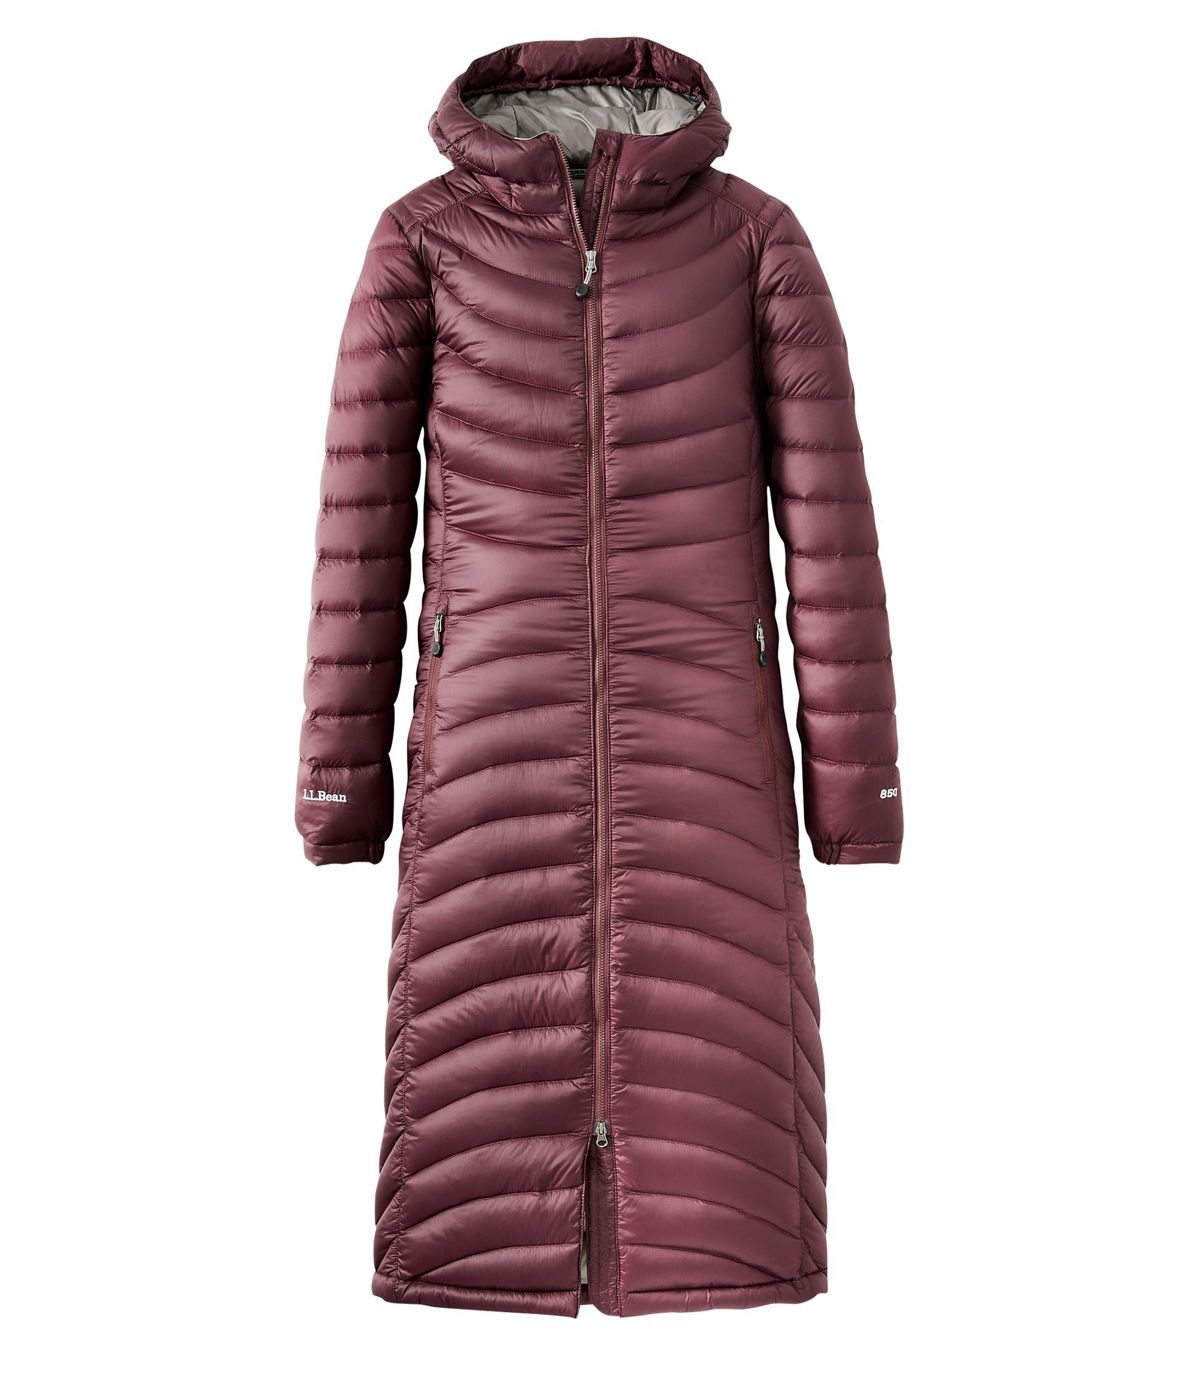 PENATE Womens Slim Elegant Down Vest Long Jacket Winter Warm Hooded Cotton Coat 